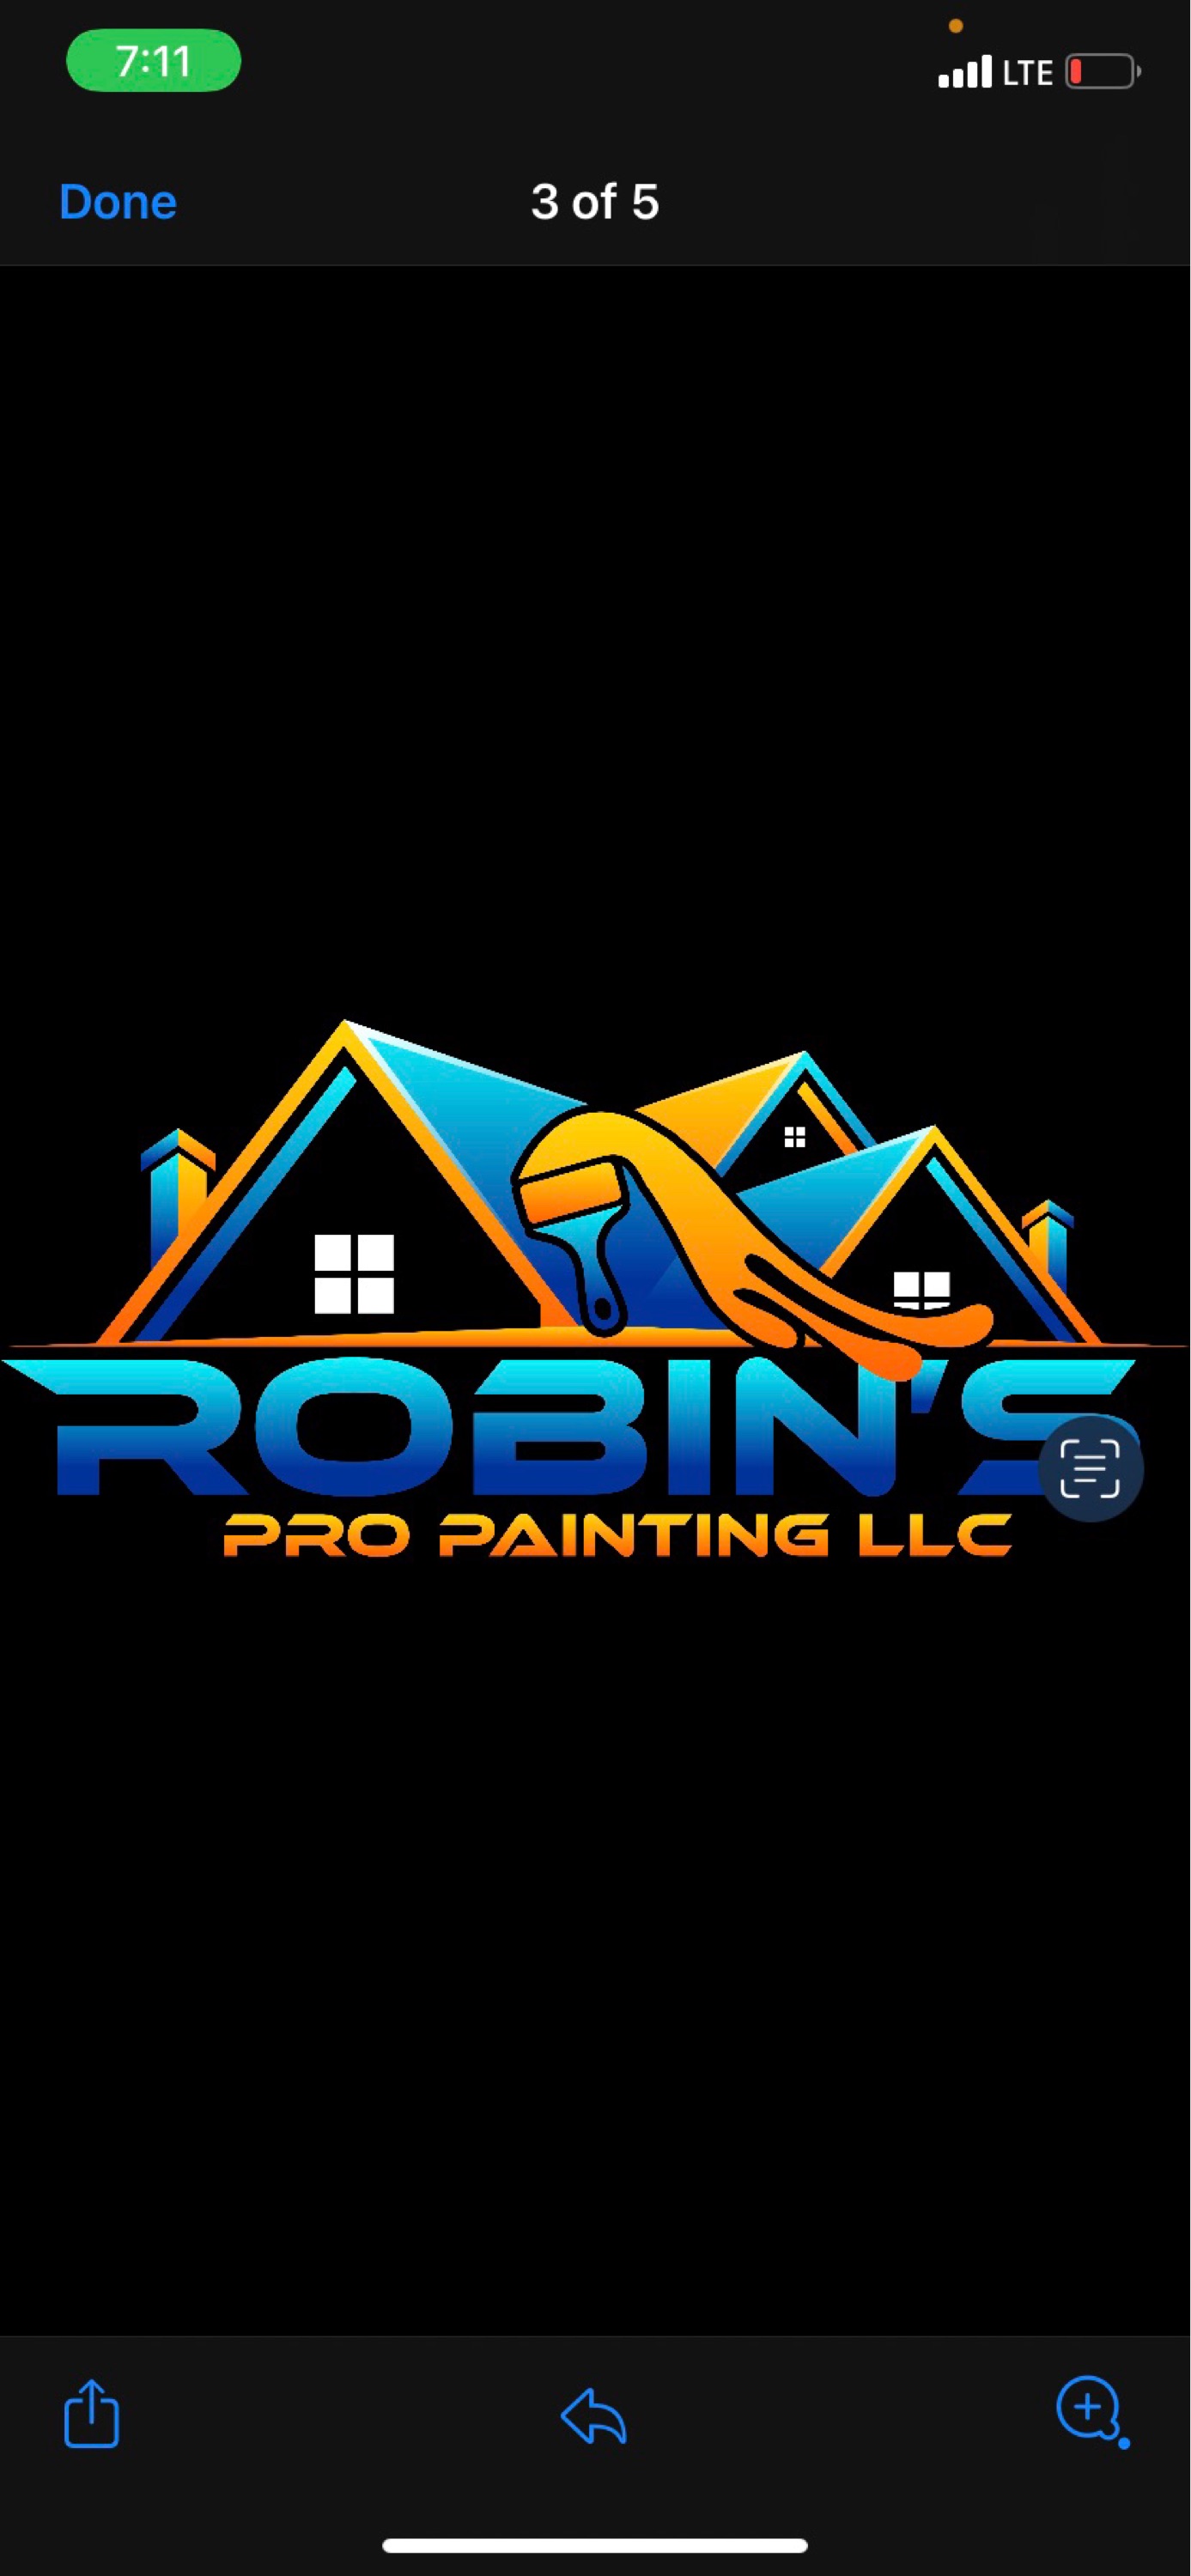 Robin's Pro Painting LLC Logo